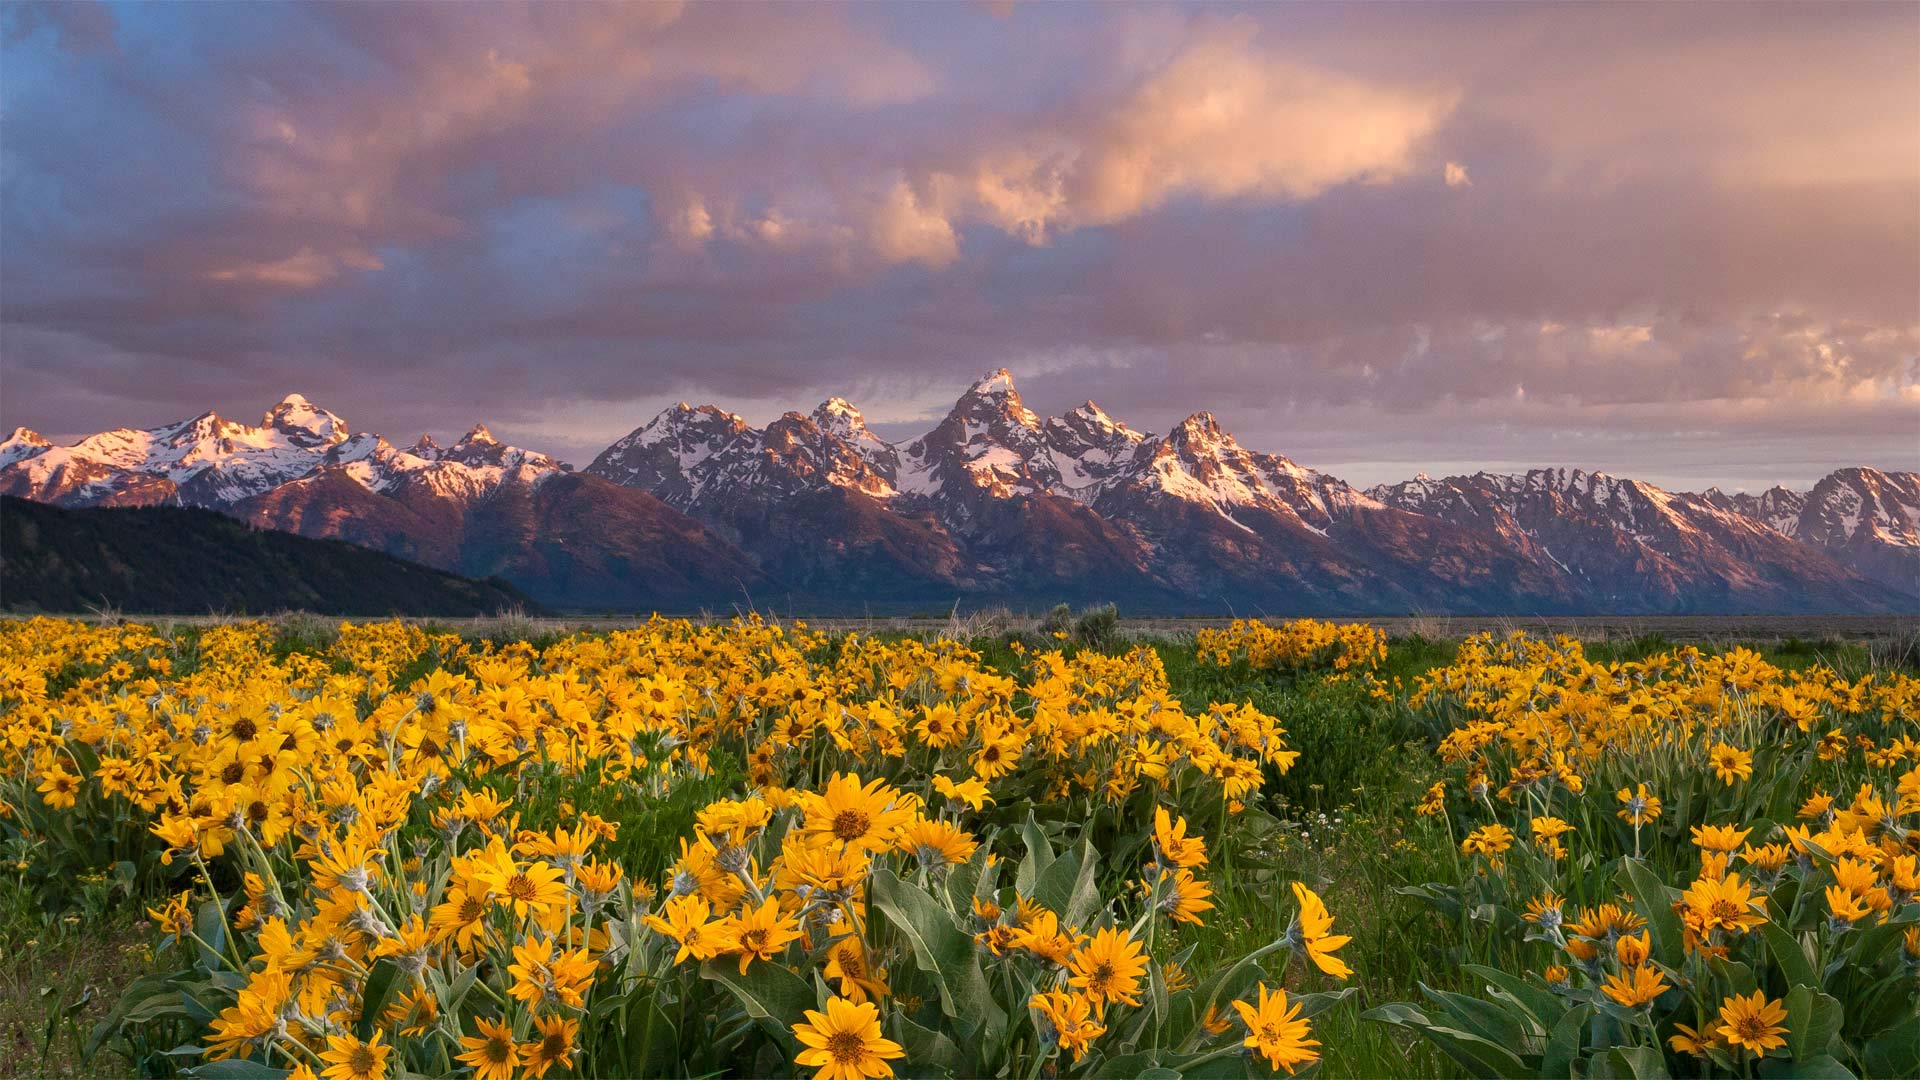 Balsamroot wildflowers bloom below the Teton Mountains in Grand Teton National Park, Wyoming - Mike Cavaroc/Tandem Stills + Motion)